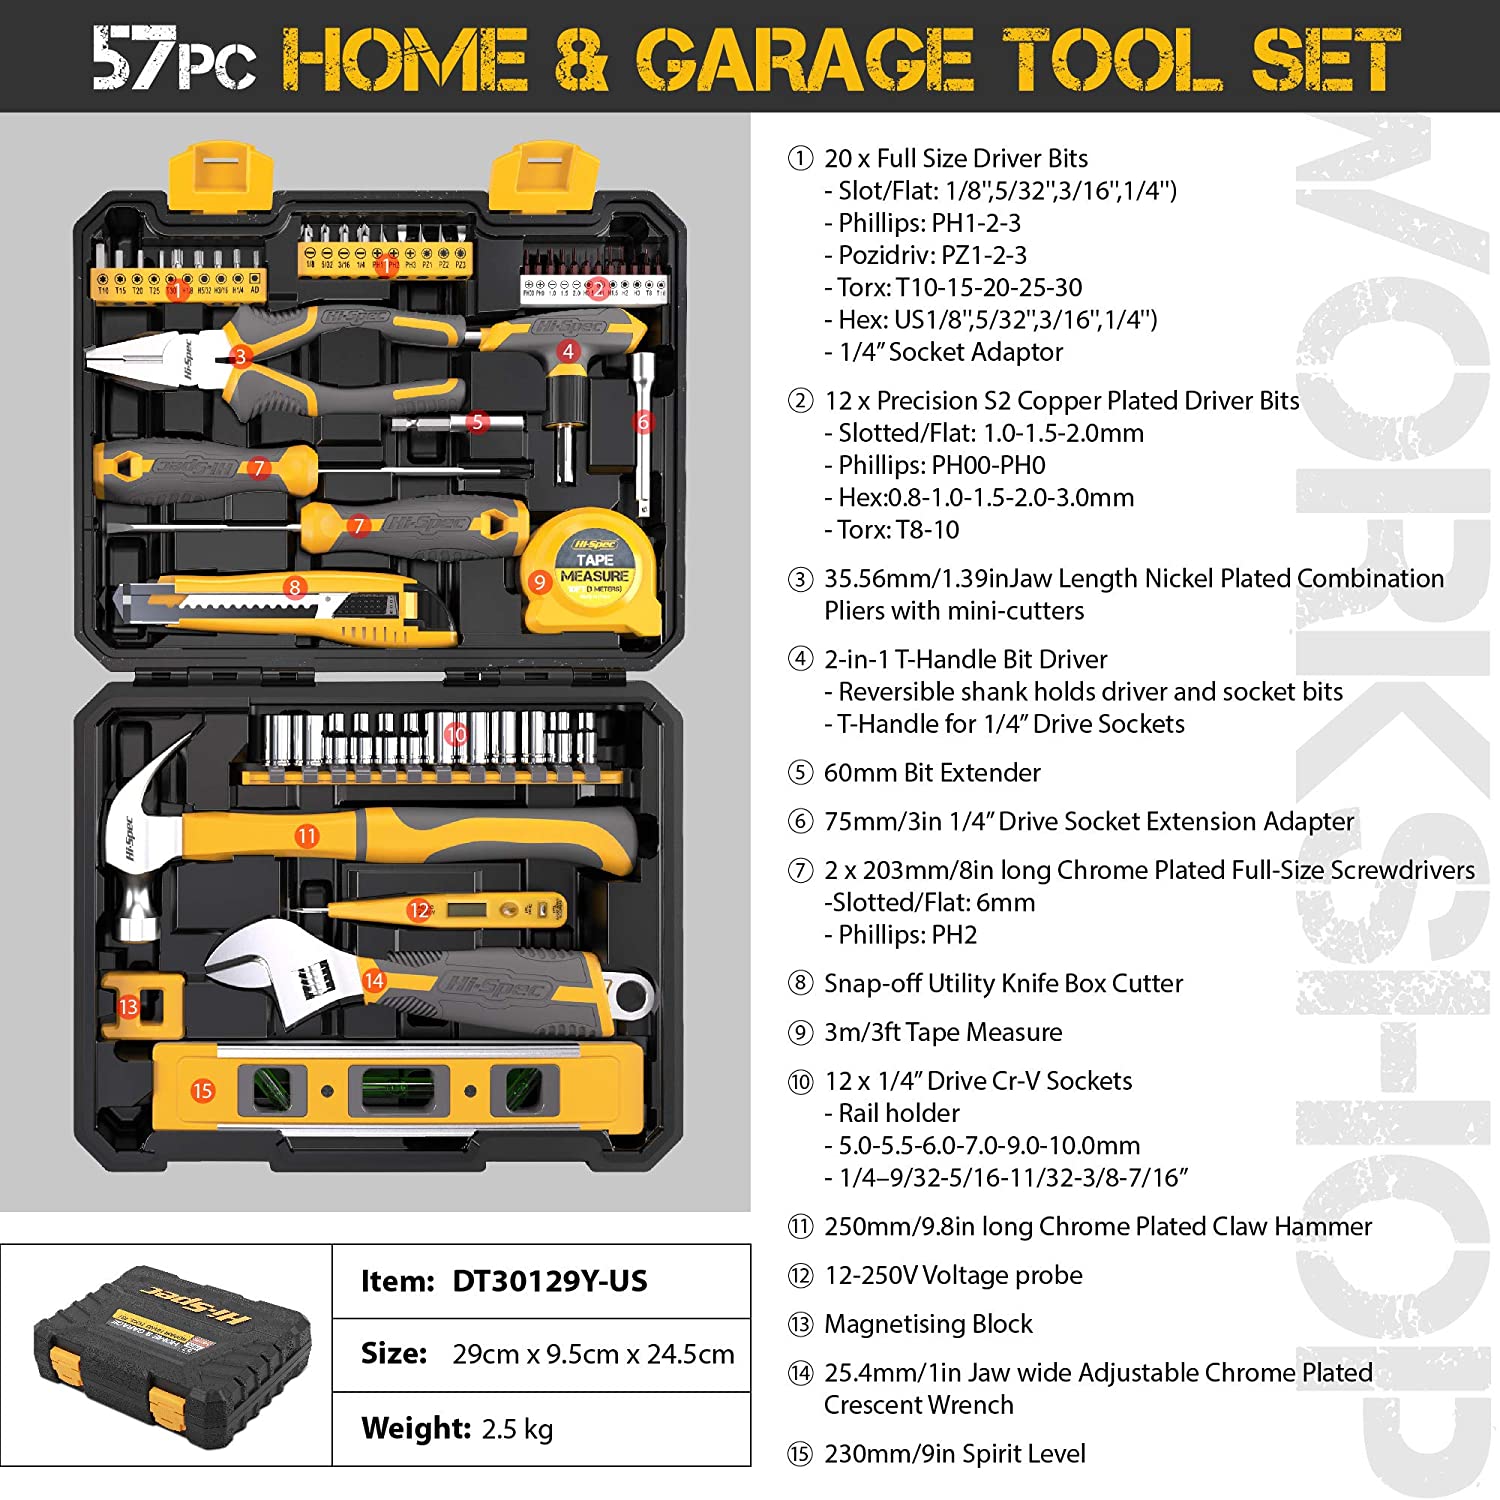 Hi-Spec 54pc Pink Home DIY Tool Kit Set for Women, Office & Garage